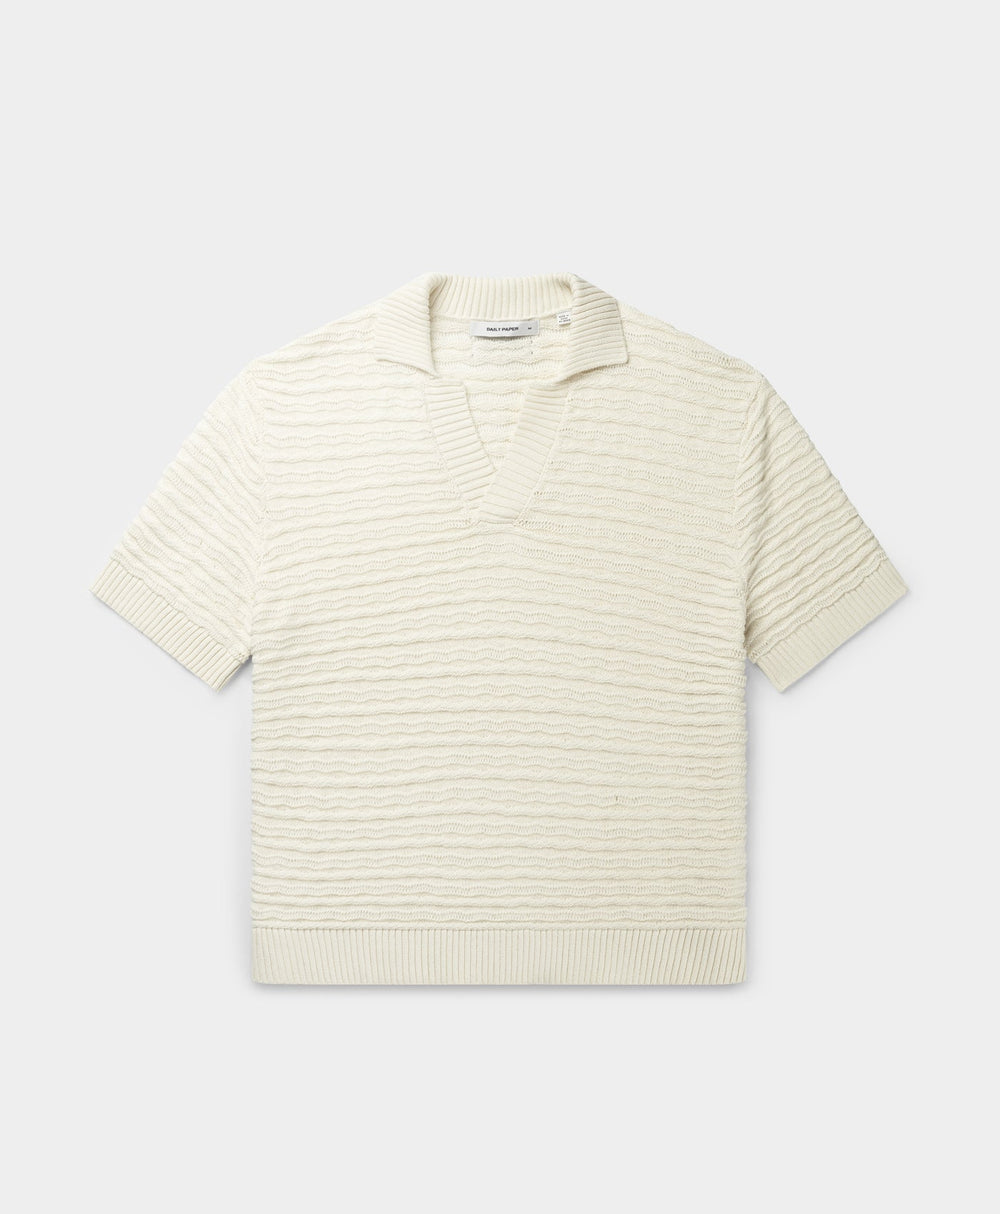 DP - Frost White Jabir Knit Sweater Polo - Packshot - Front